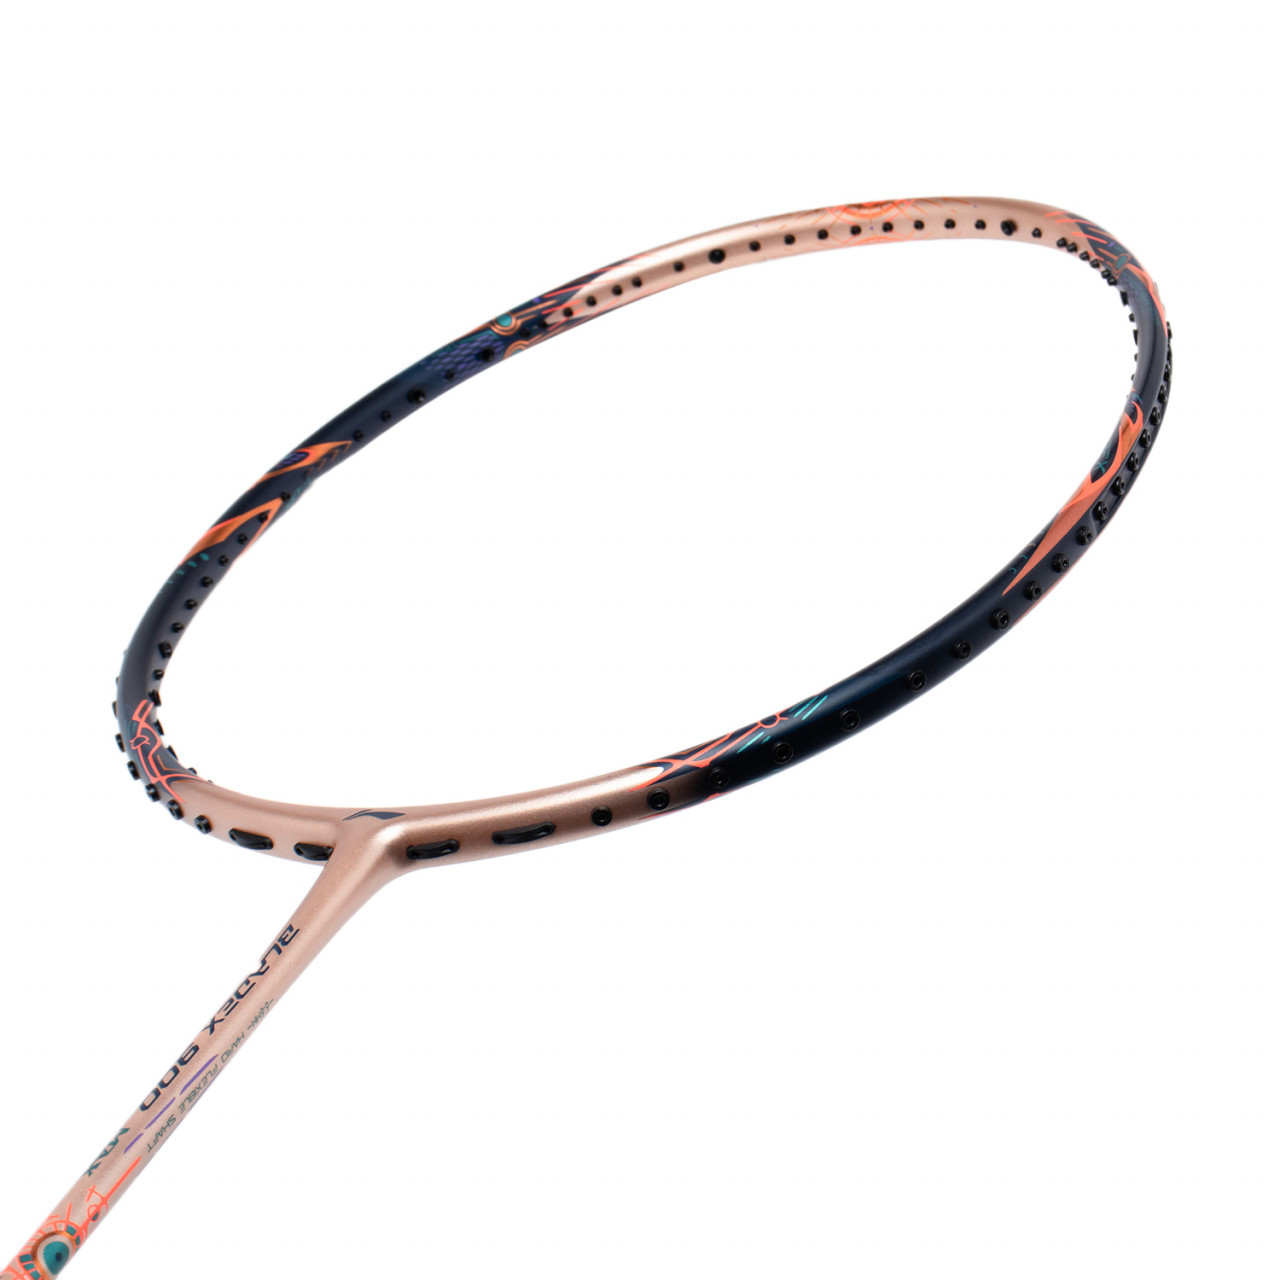 Li-Ning Bladex 900 Sun Max Drive (4U) Badmintonschläger - Unbesaitet